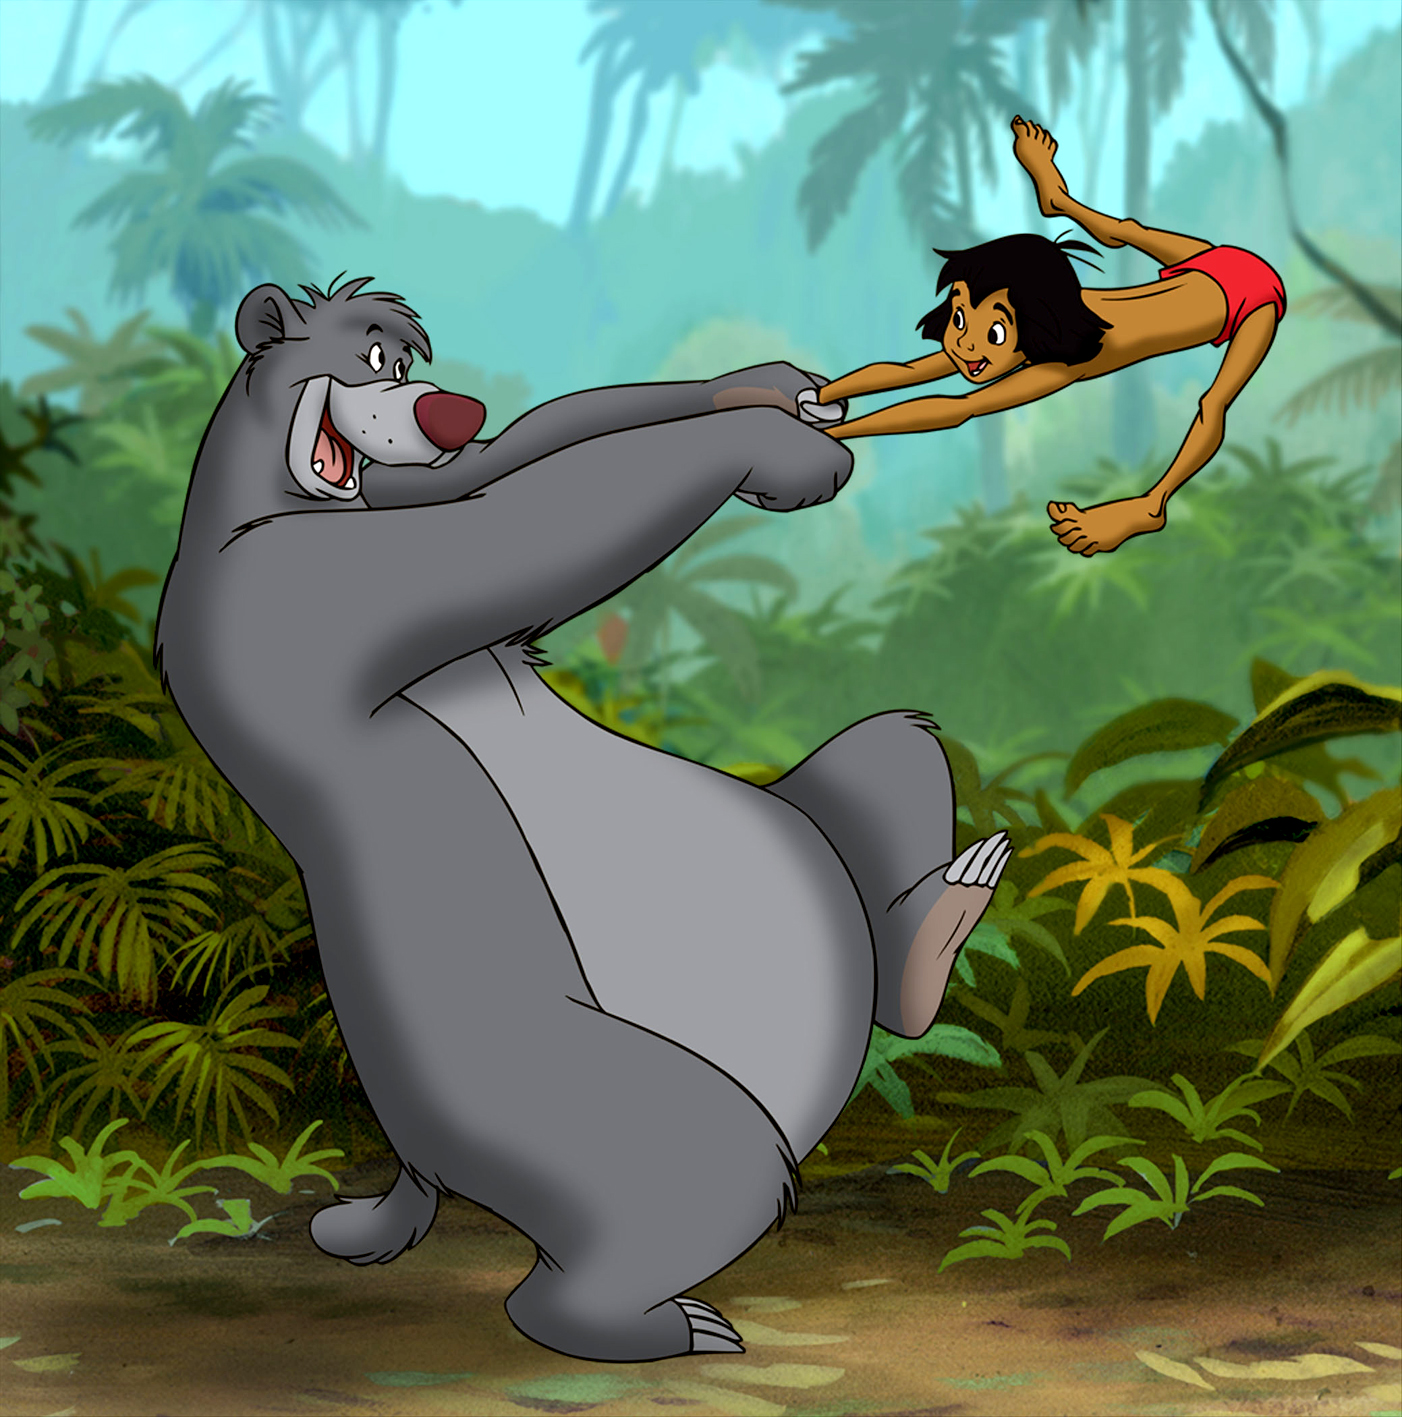 Jungle book - Mowgli and baloo characters.